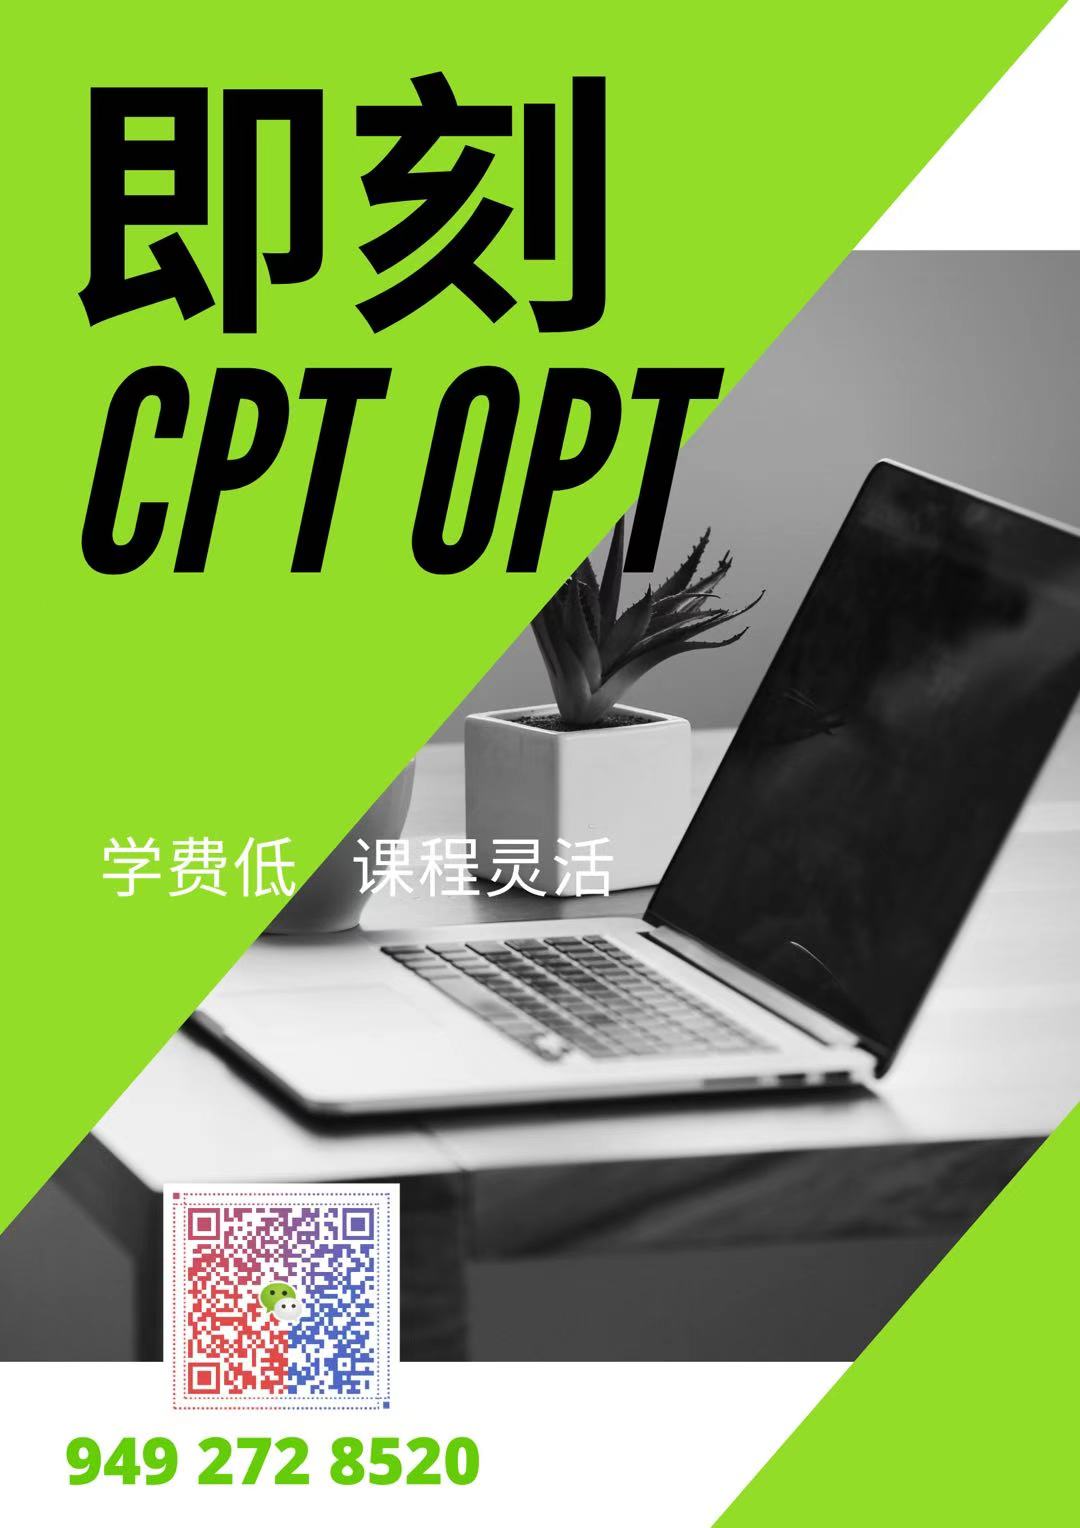 CPT OPT 低价办理 快速下签 群主微信二维码